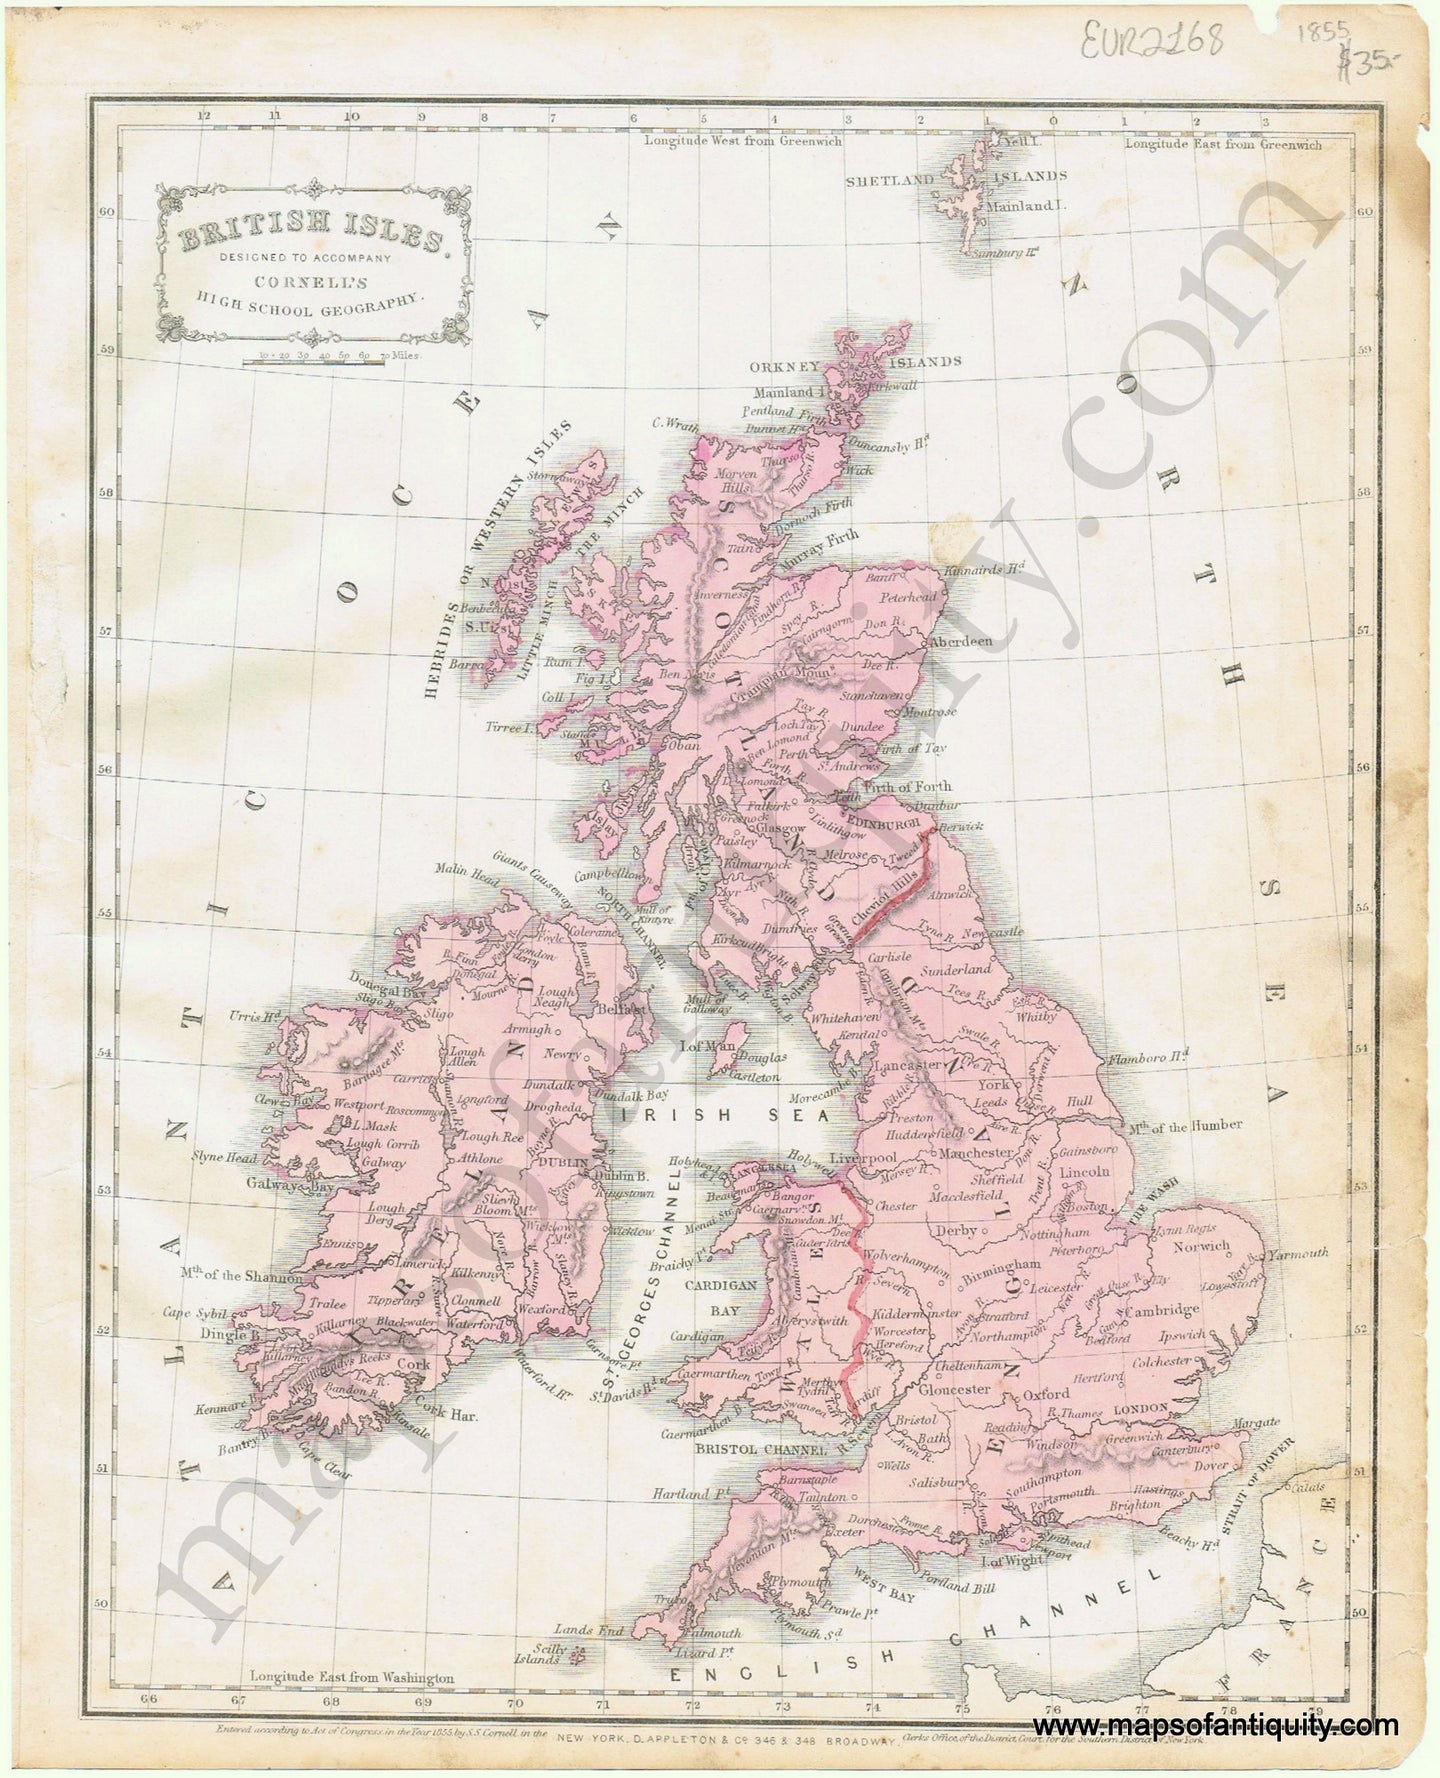 Antique-Hand-Colored-Map-British-Isles-Europe-England-Scotland-Ireland-1855-Appleton/Cornell-Maps-Of-Antiquity